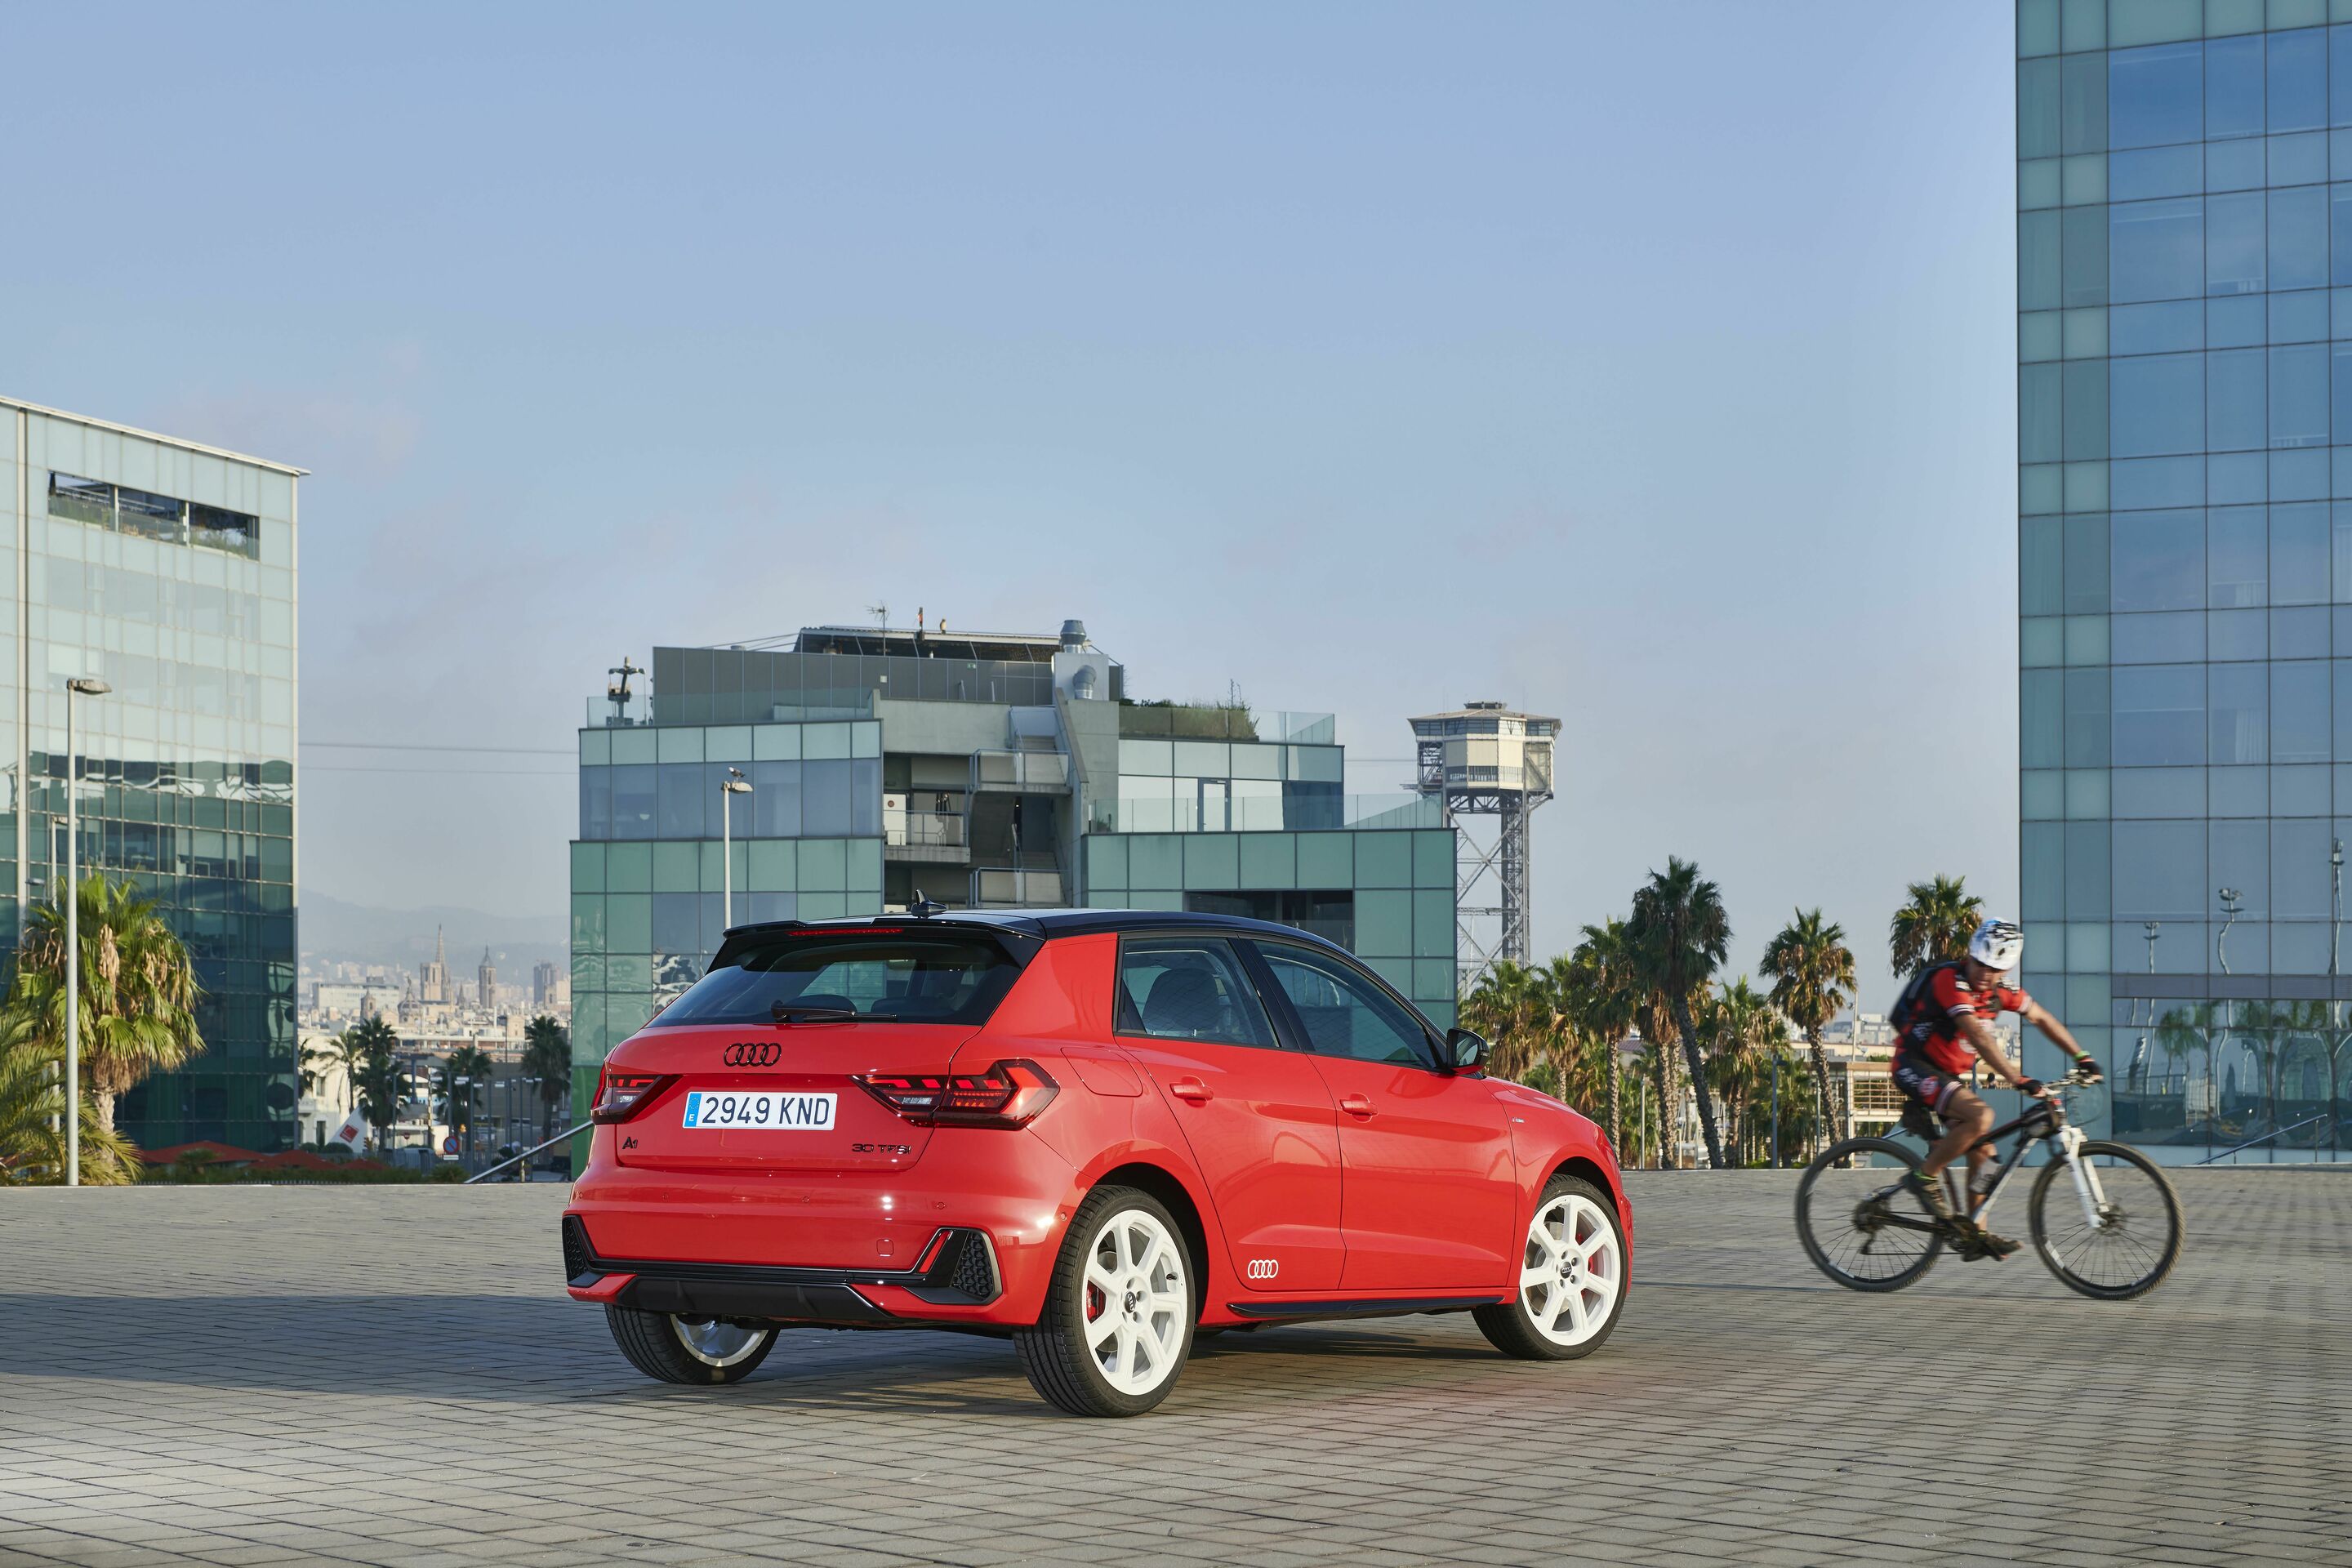 Audi A1 Sportback new on Merkamotor Tortosa, official Audi